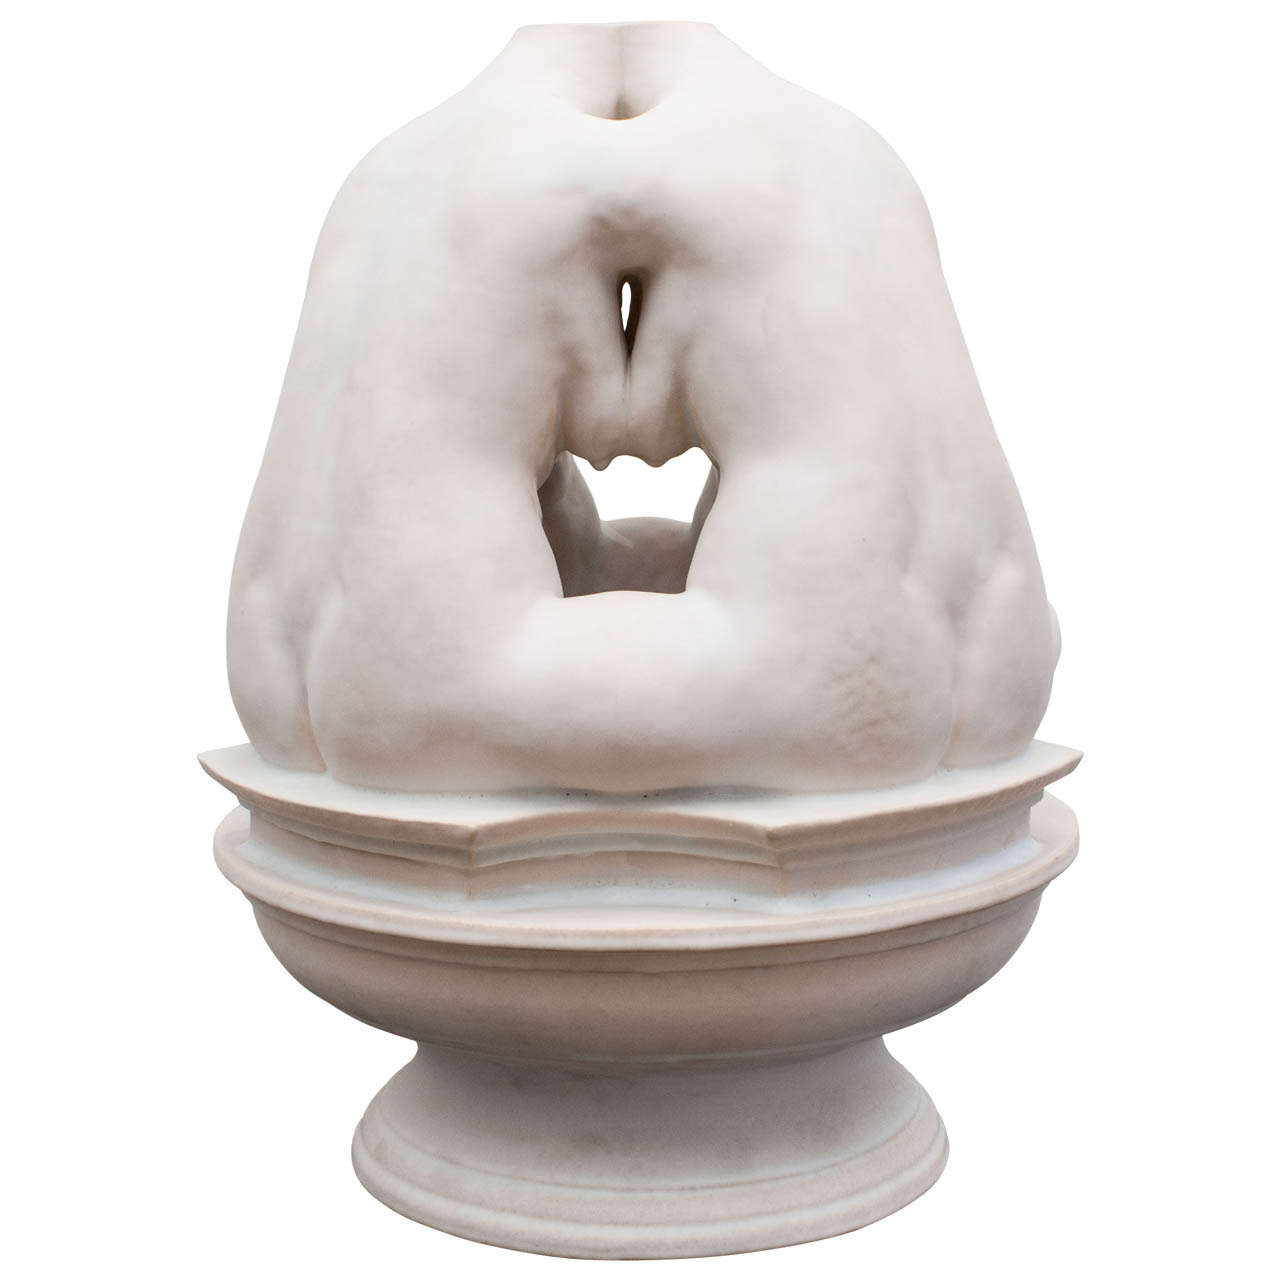 Dirk Staschkes Ceramic Sculpture "Bud" For Sale